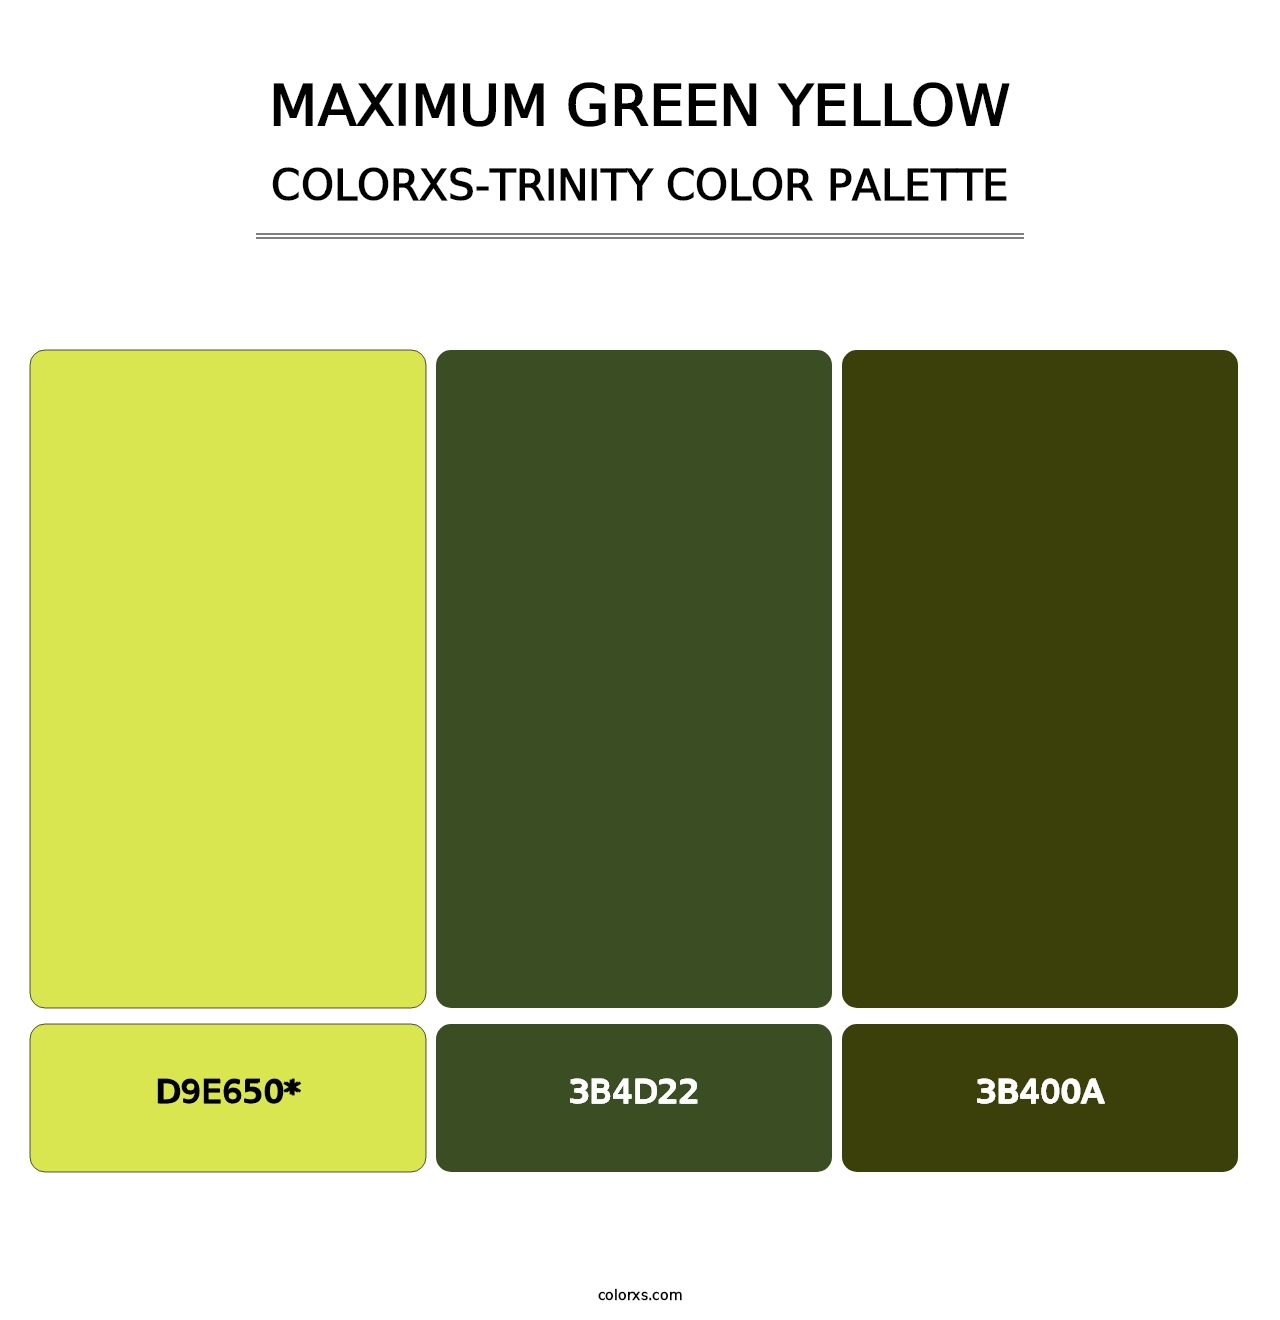 Maximum Green Yellow - Colorxs Trinity Palette